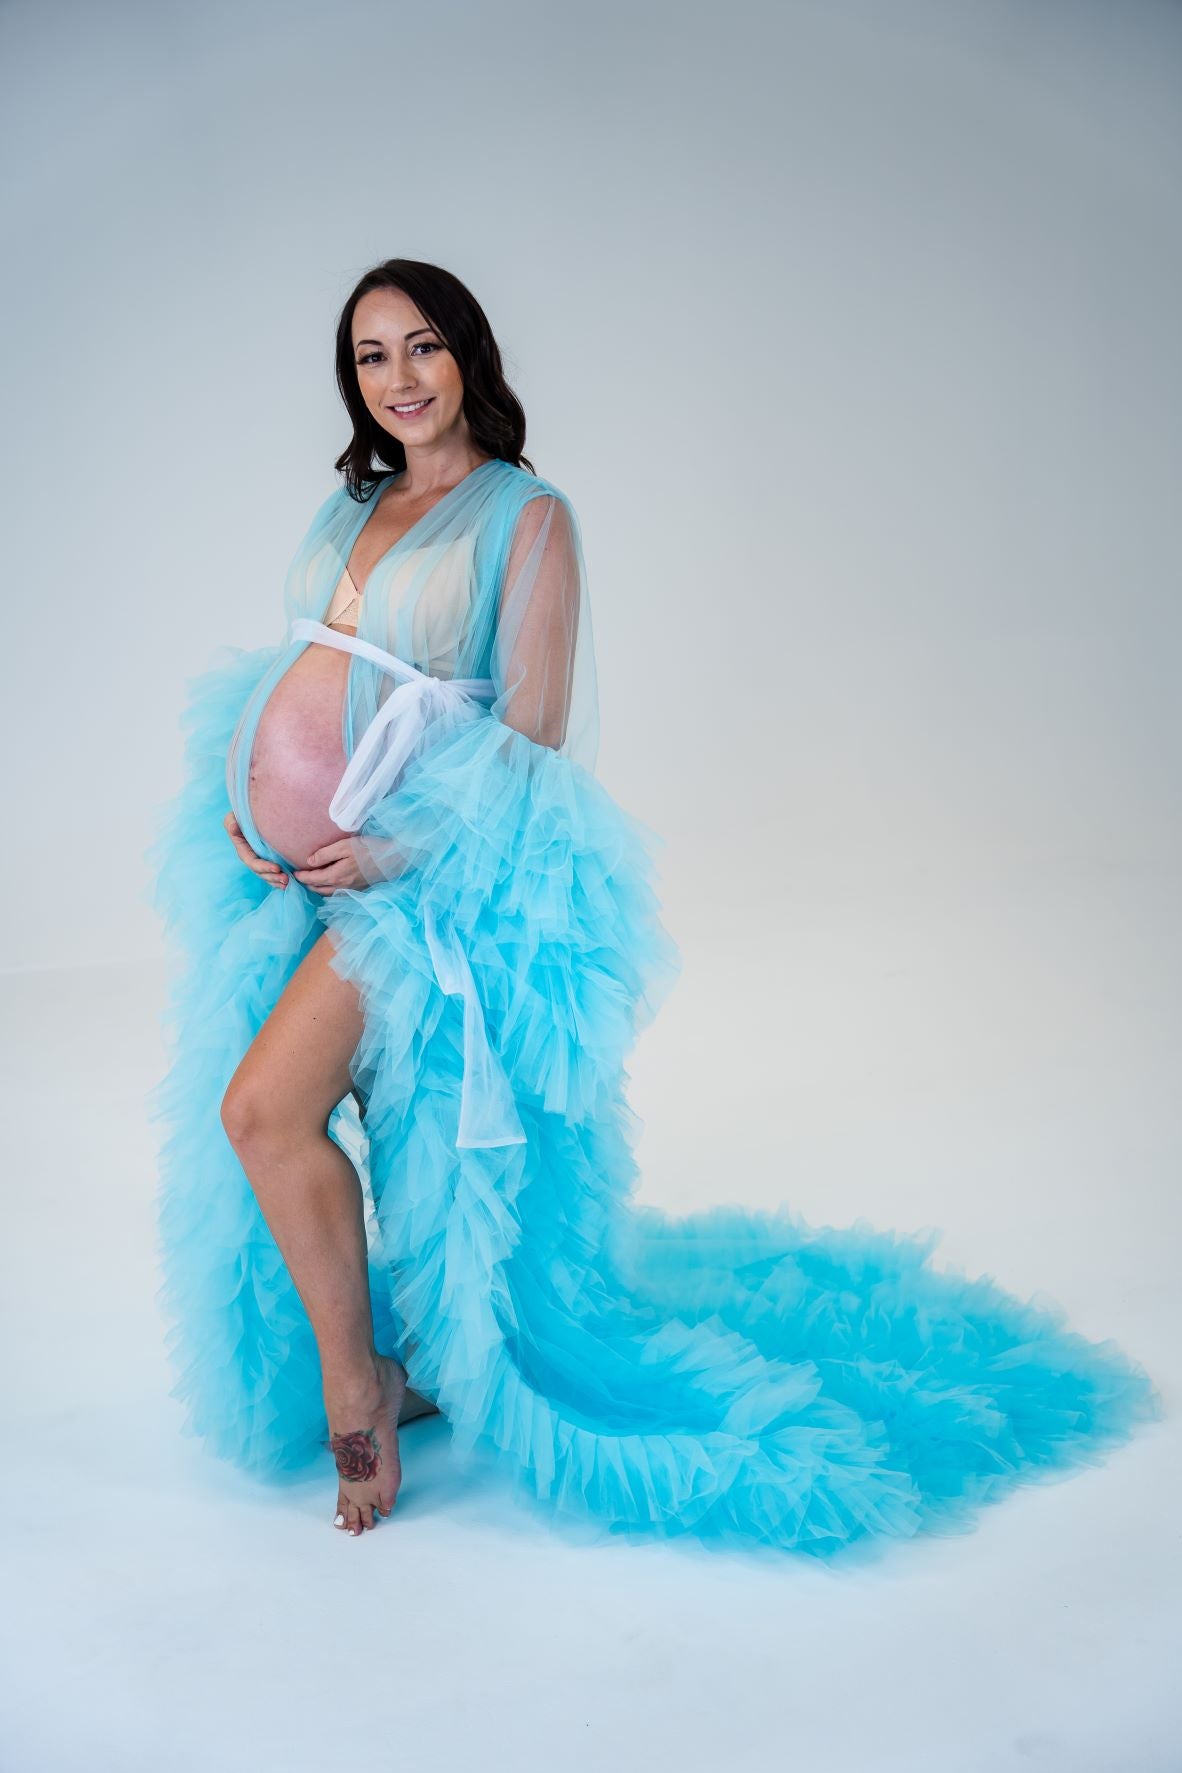 Maternity Photoshoot Dresses Sydney